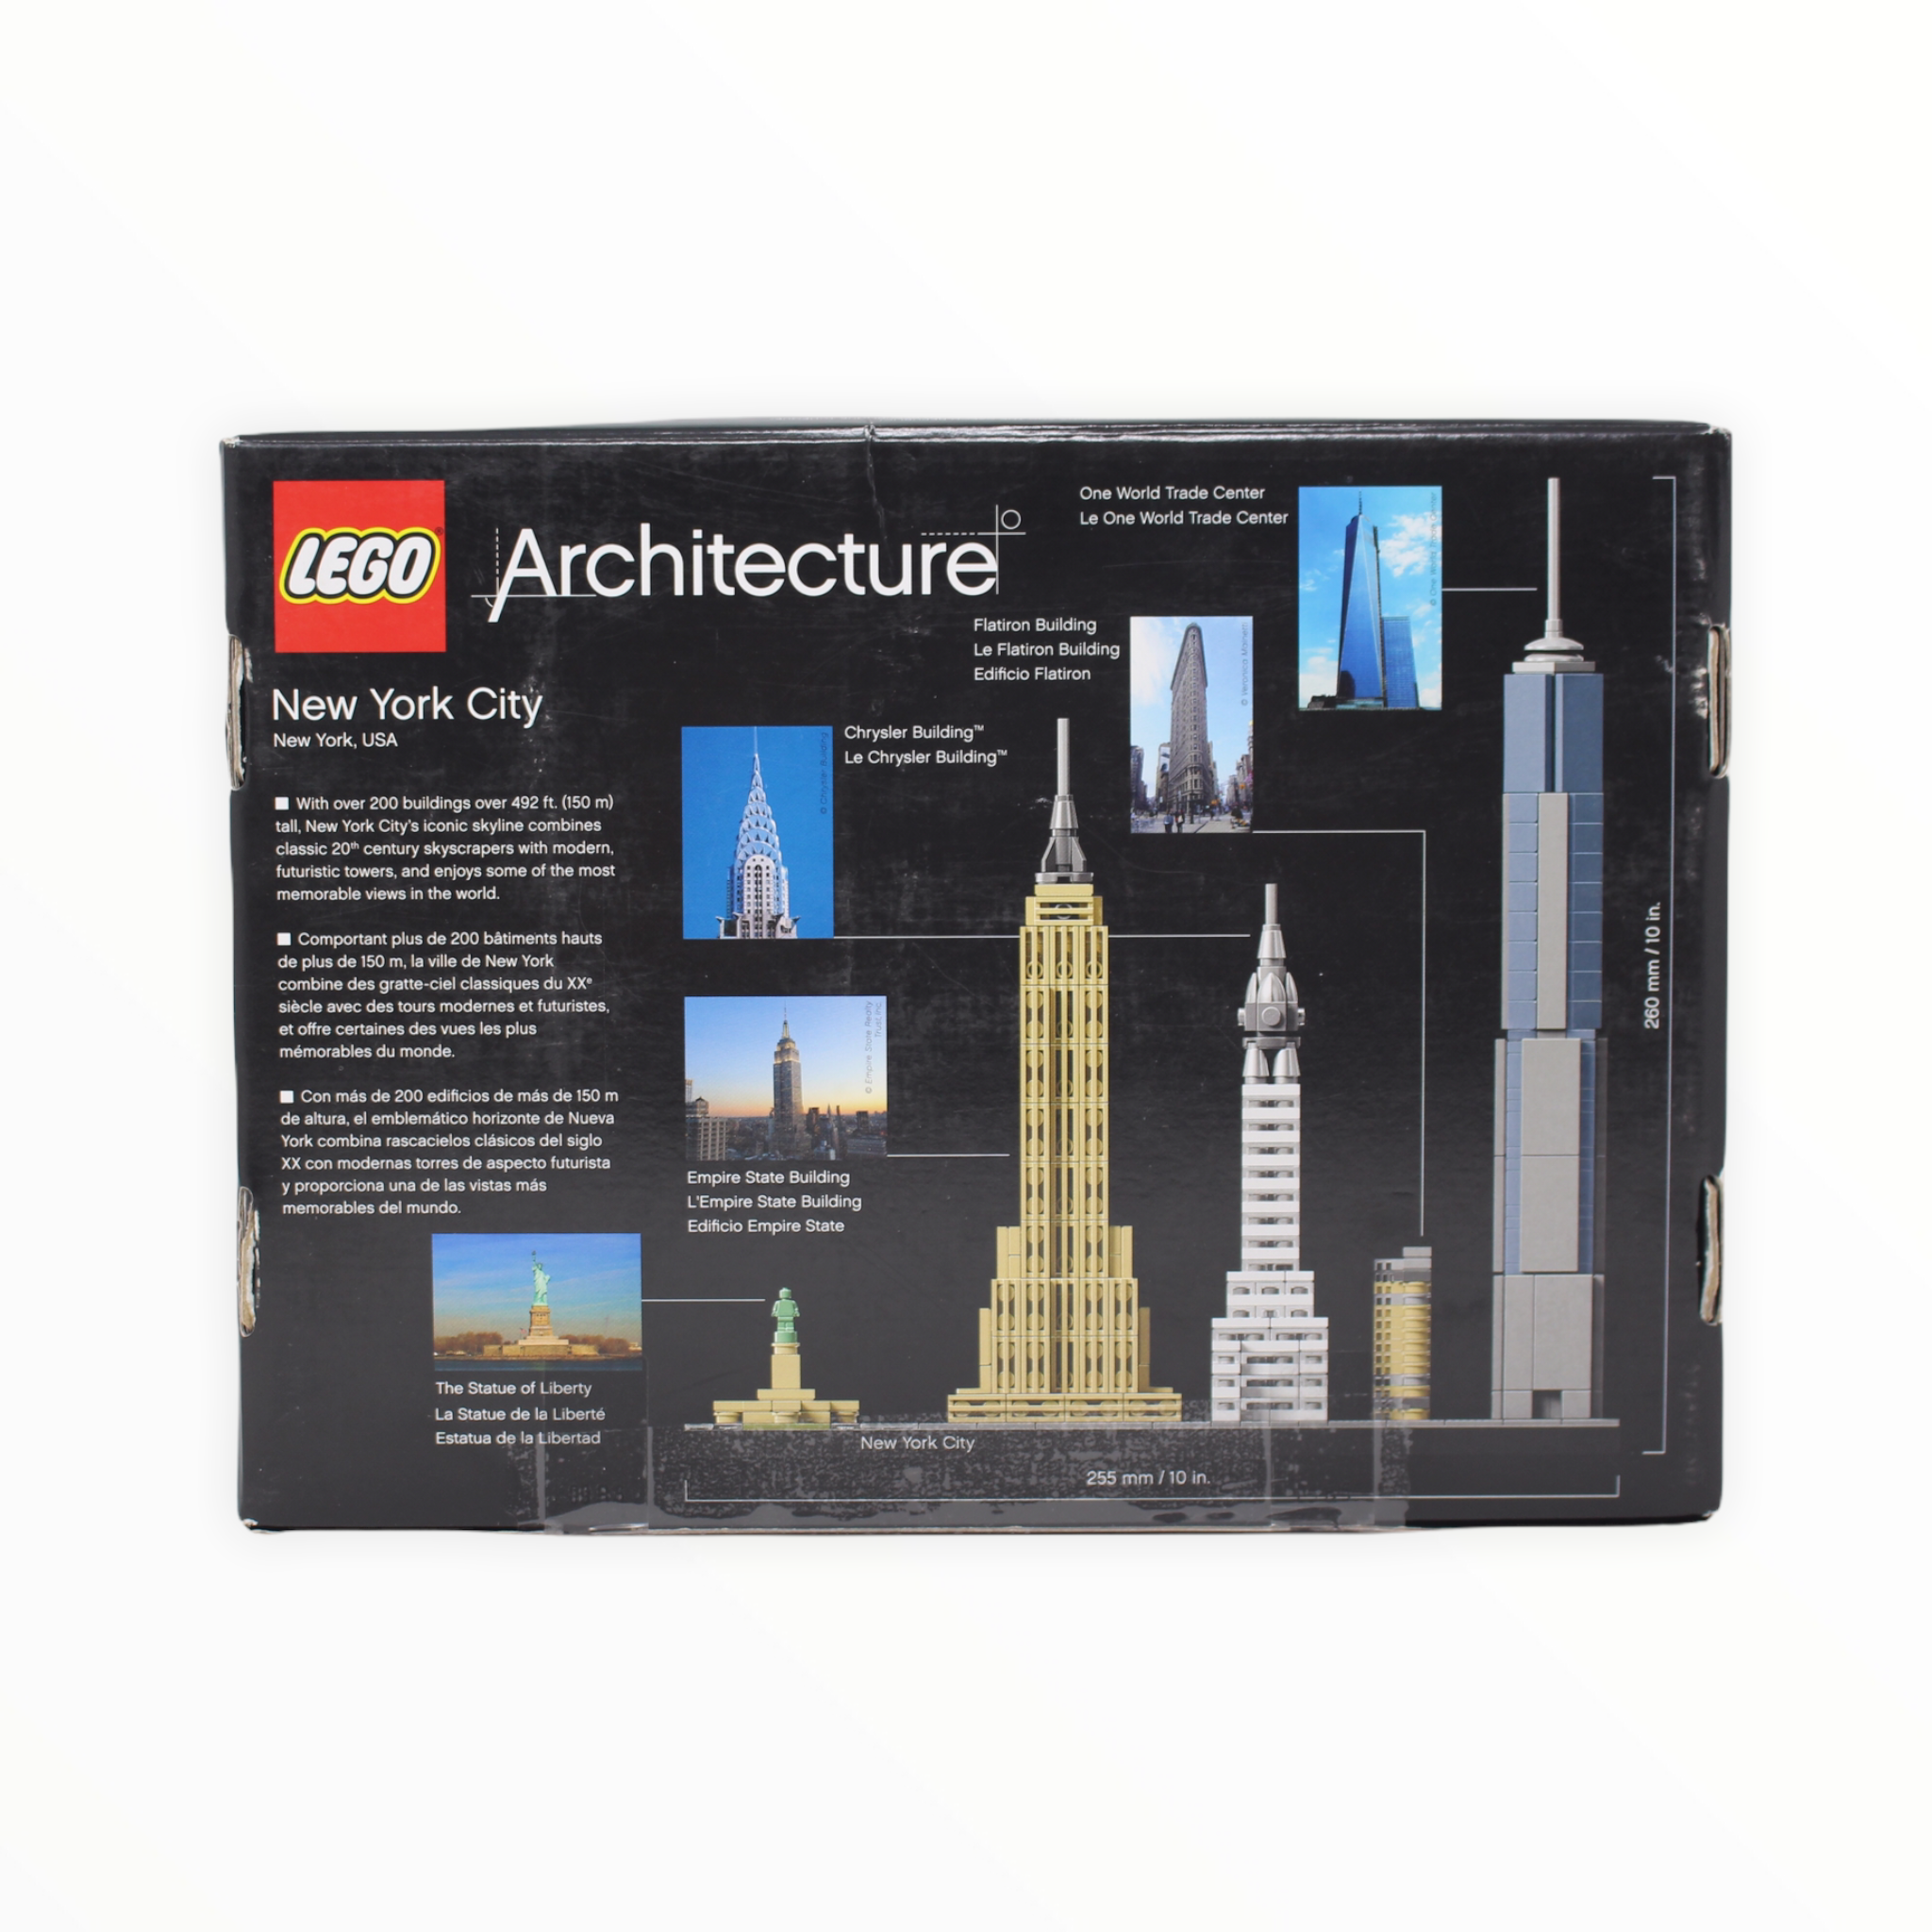 LEGO New York City LEGO Architecture (21028) Retired & Complete Set!!